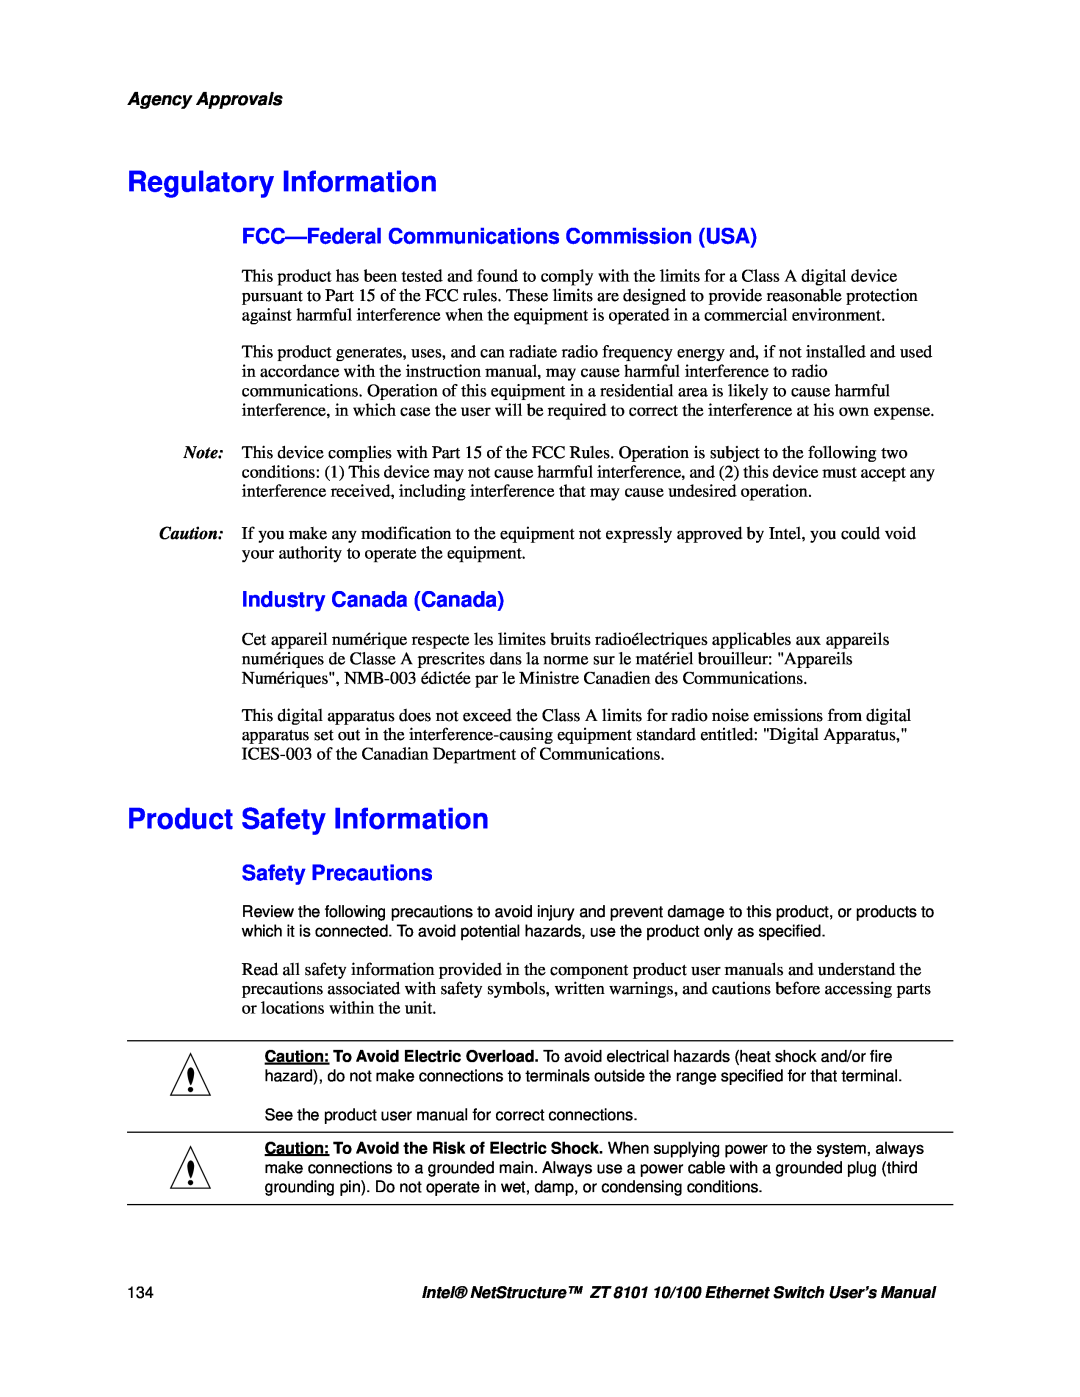 Intel ZT 8101 10/100 Regulatory Information, Product Safety Information, FCC—FederalCommunications Commission USA 